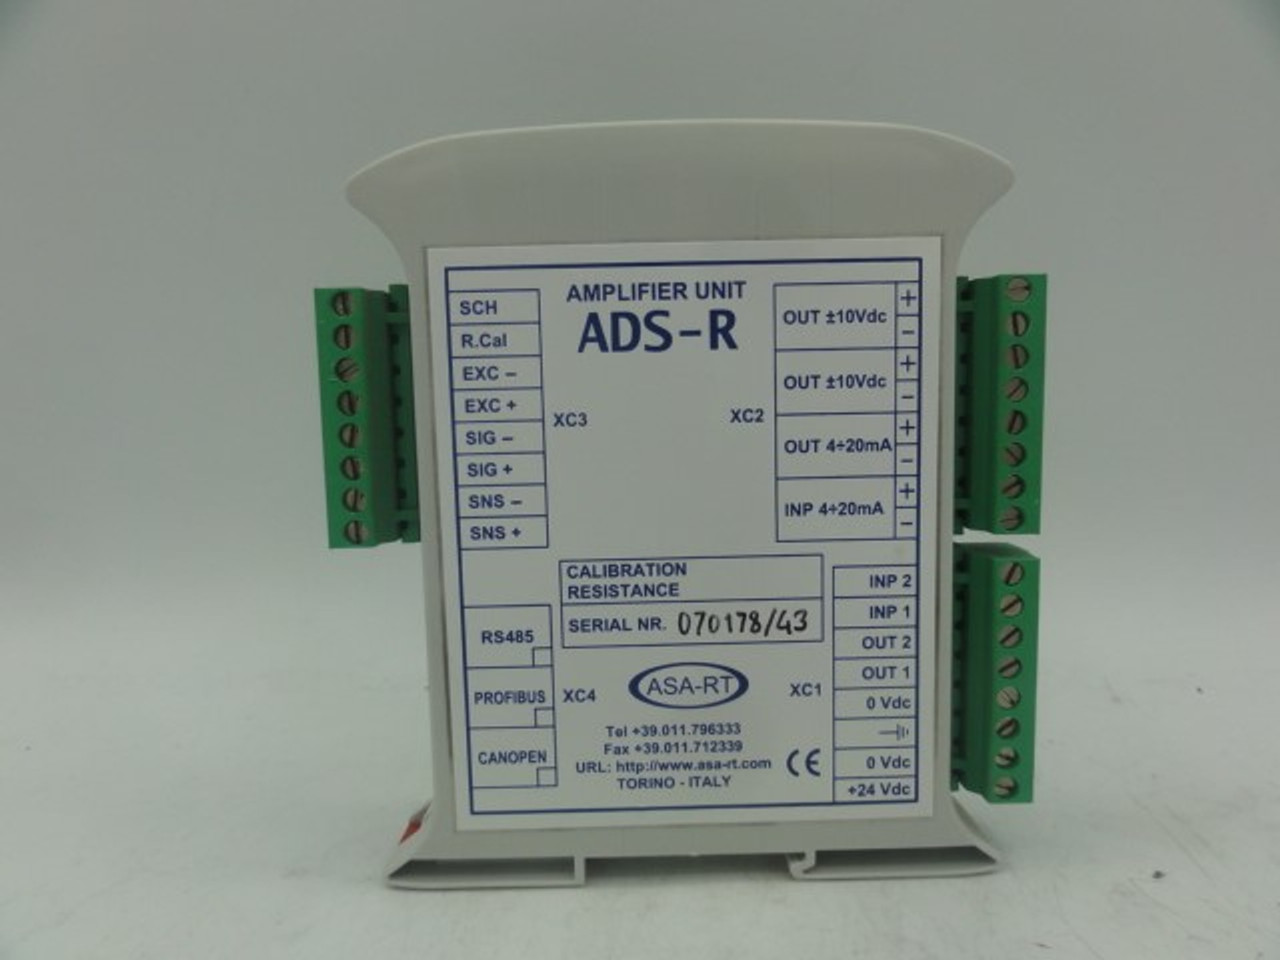 ASA- RT ADS-R Amplifier Unit